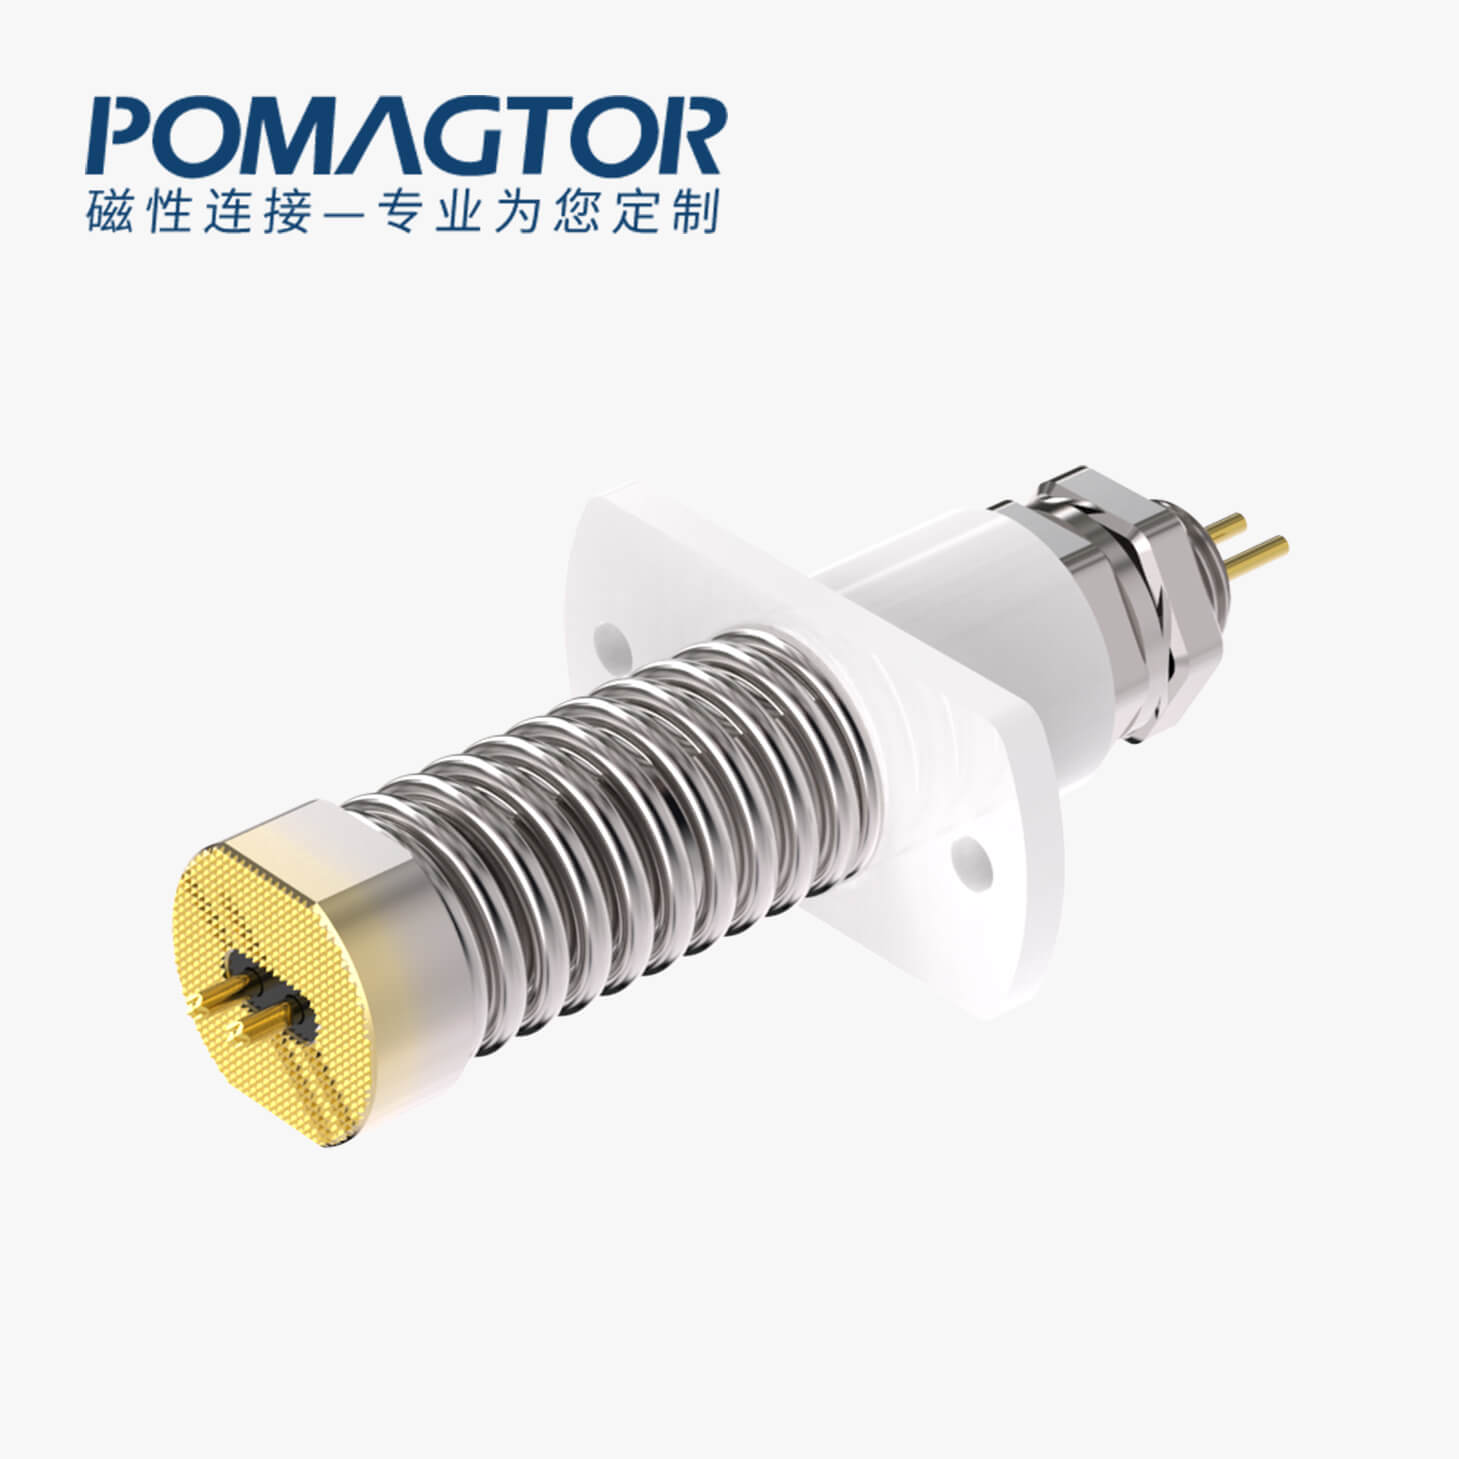 POGO PIN 大电流：电压220V，电流60A，工作行程6mm:300±50gf，弹力20000次+，工作温度-30°~85°